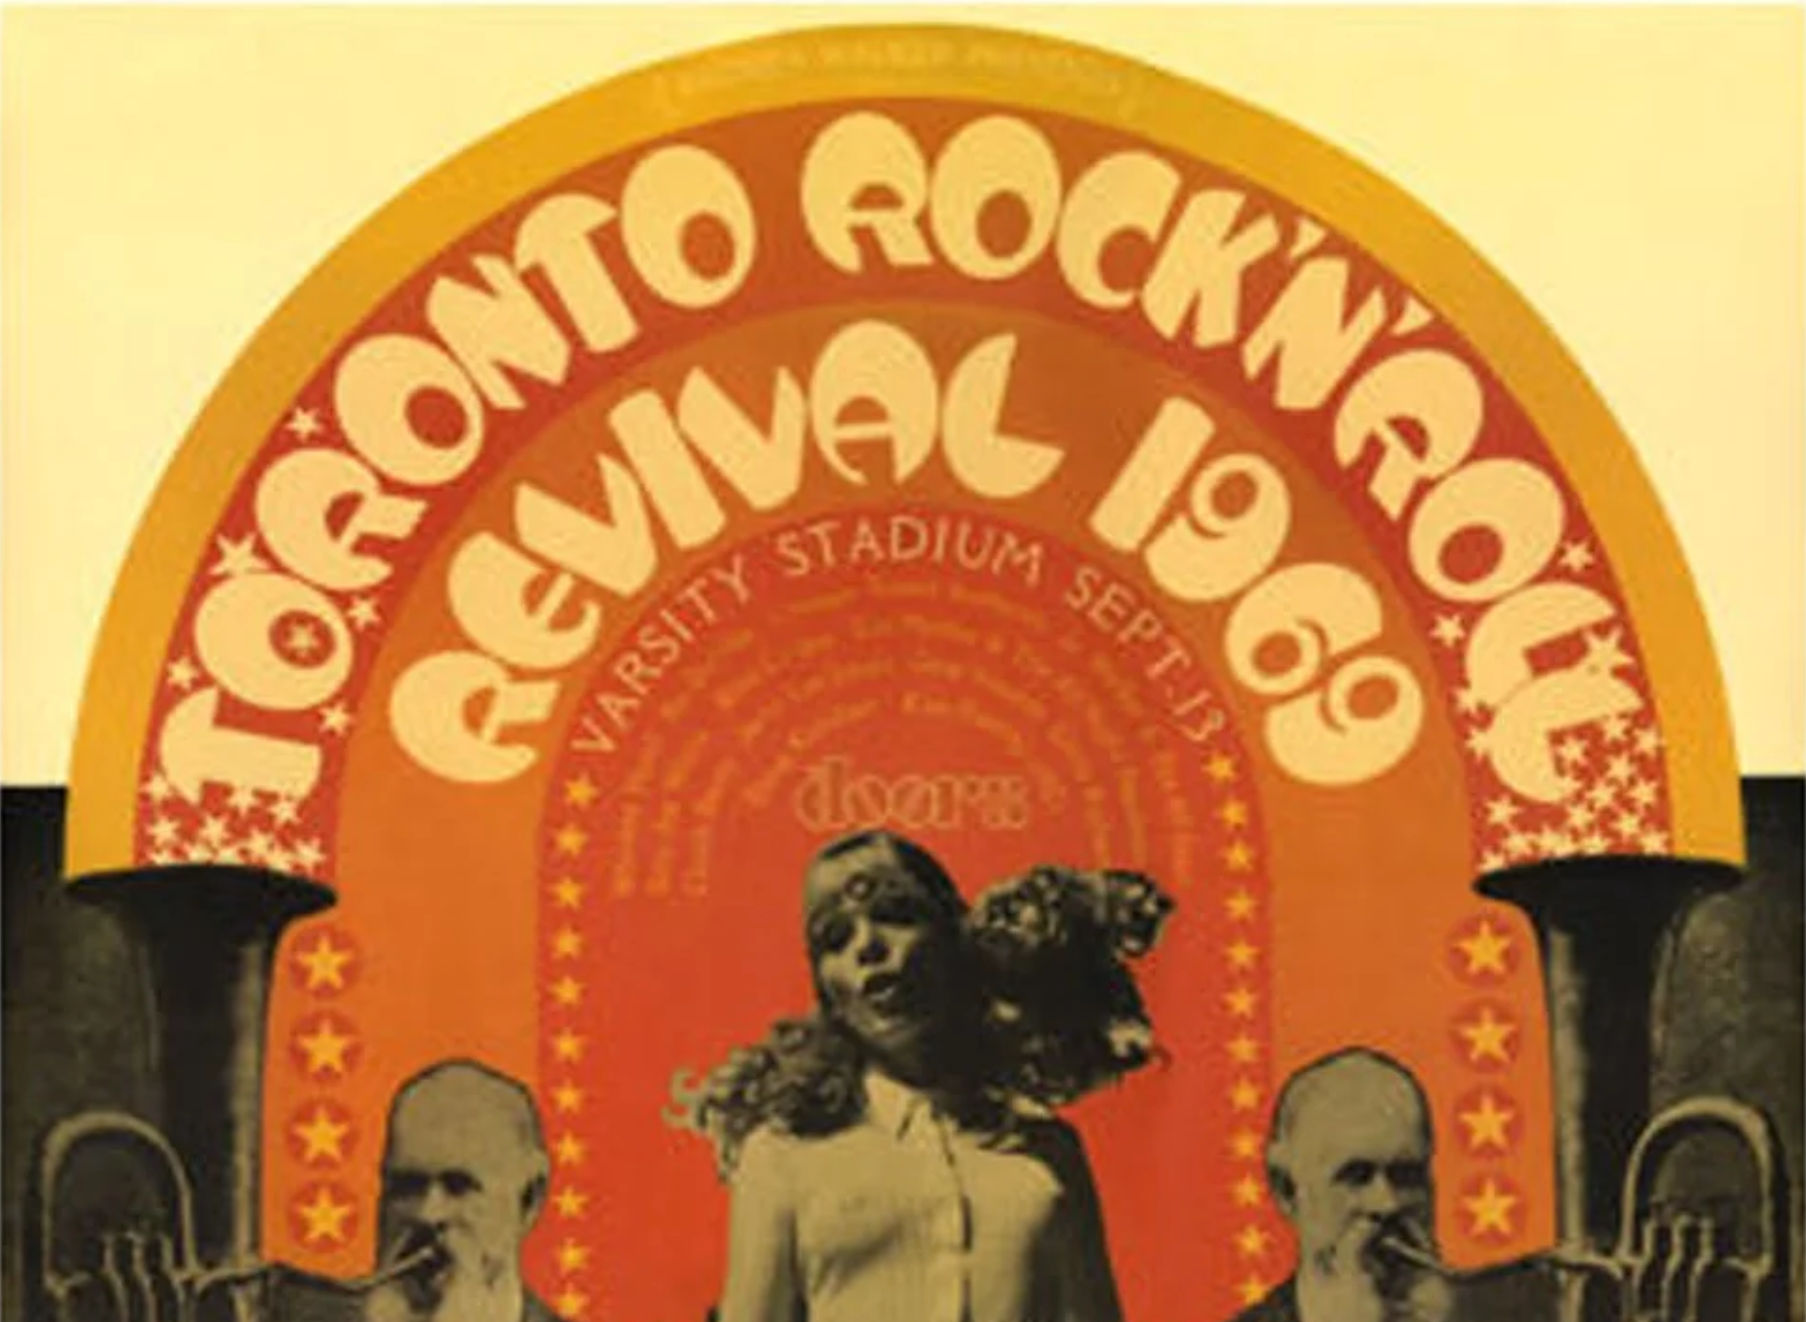 Toronto Rock & Roll Revival Poster